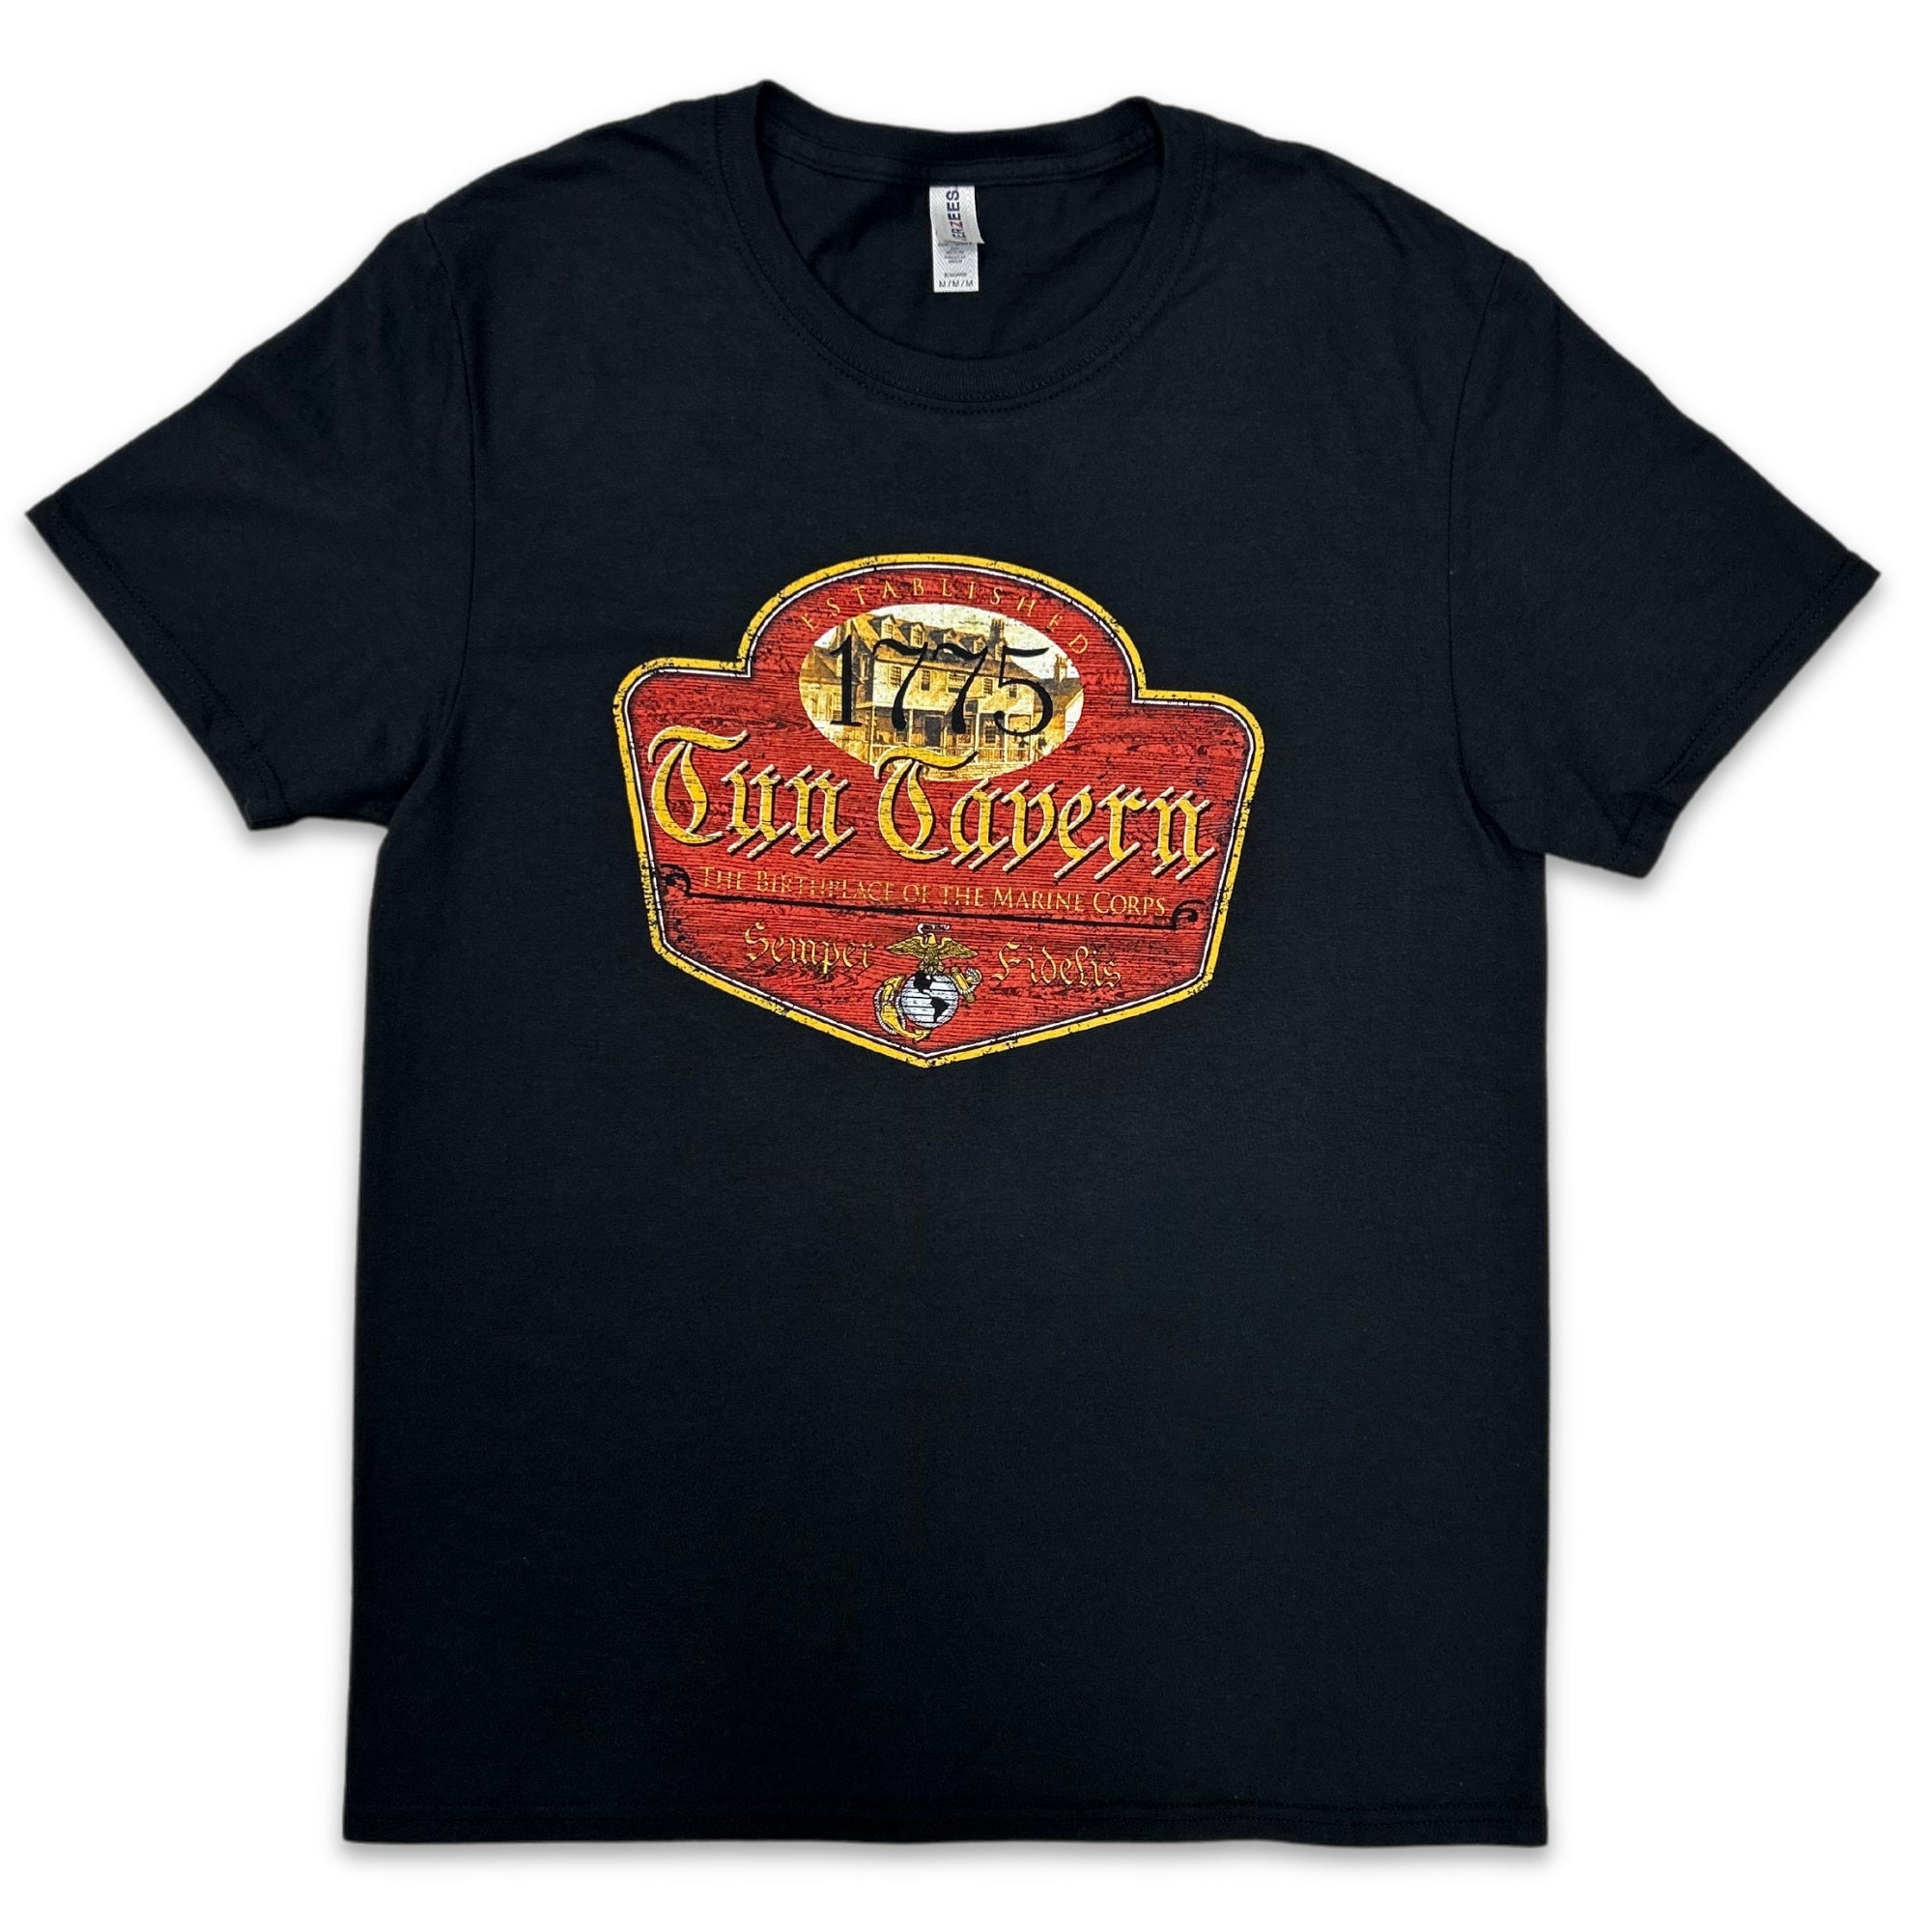 Tun Tavern T-Shirt (Black)